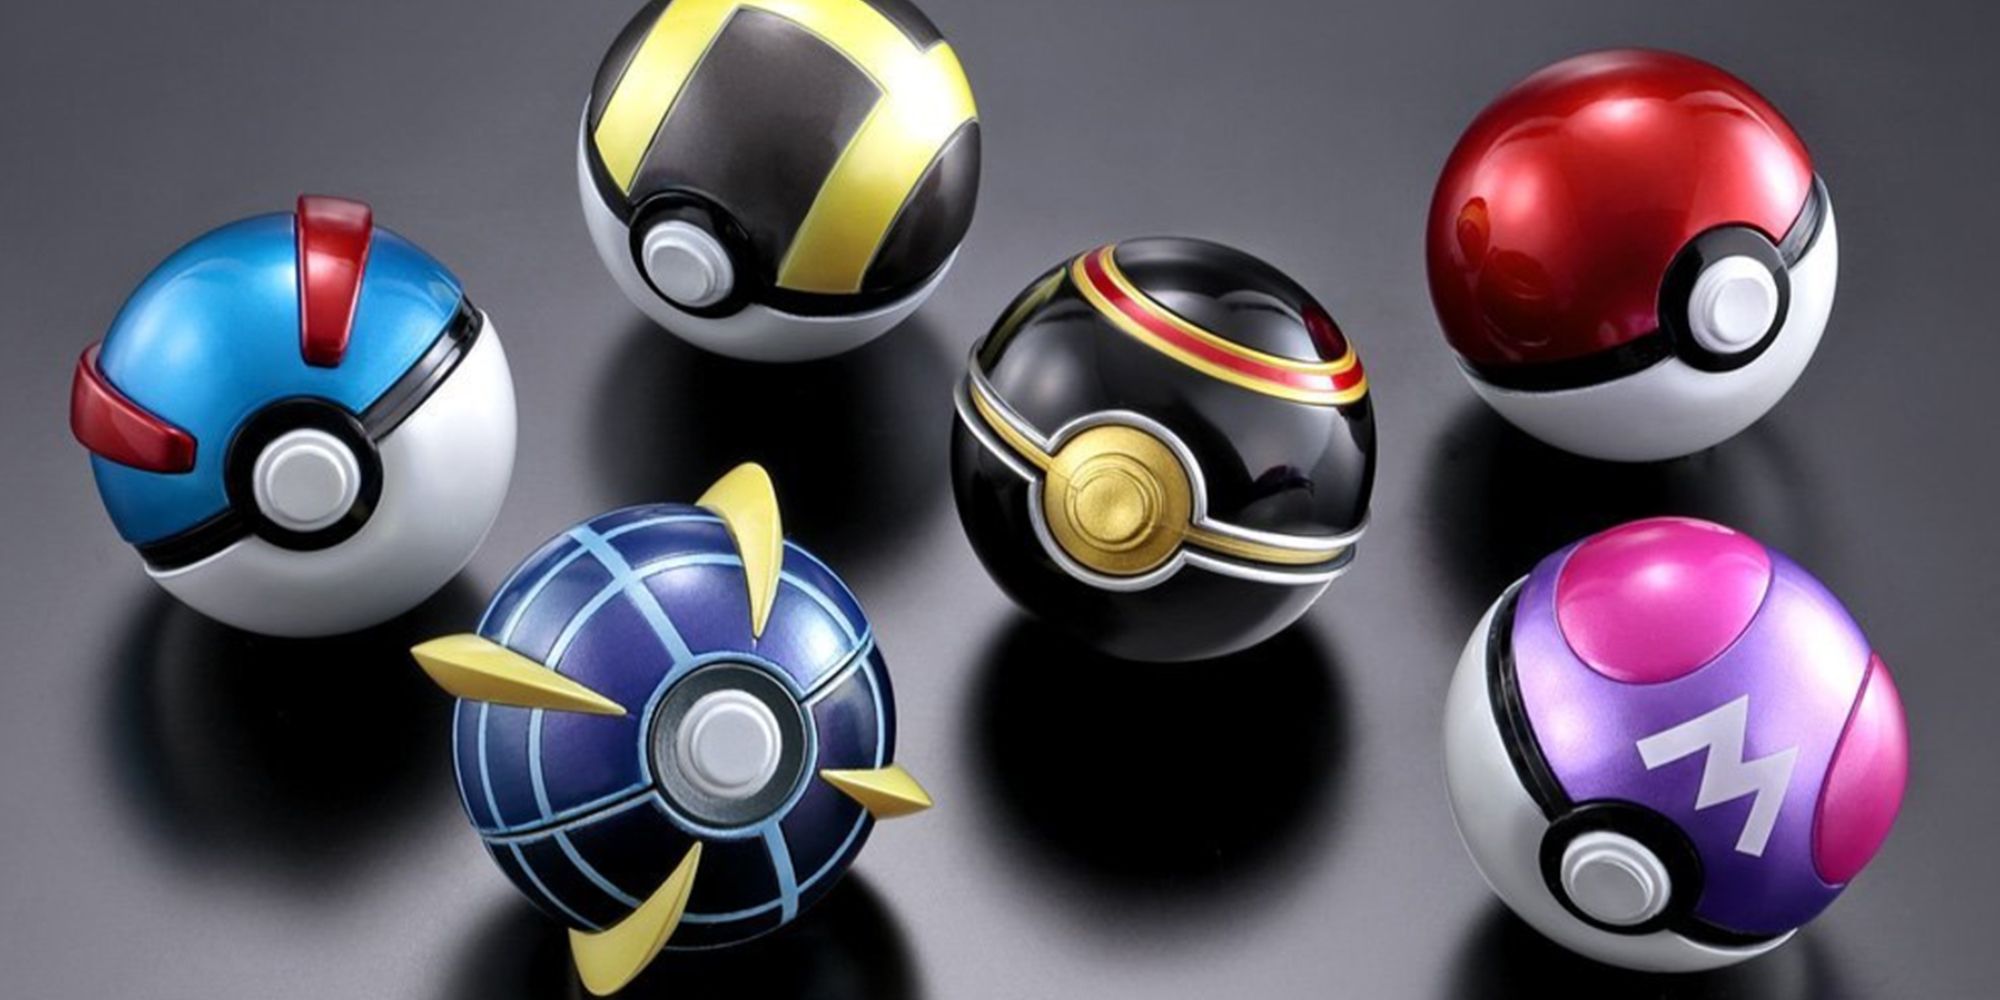 Pokémon Go - Master Ball Draw by - Vetor Book | Master ball, Pokemon,  Pokemon pictures